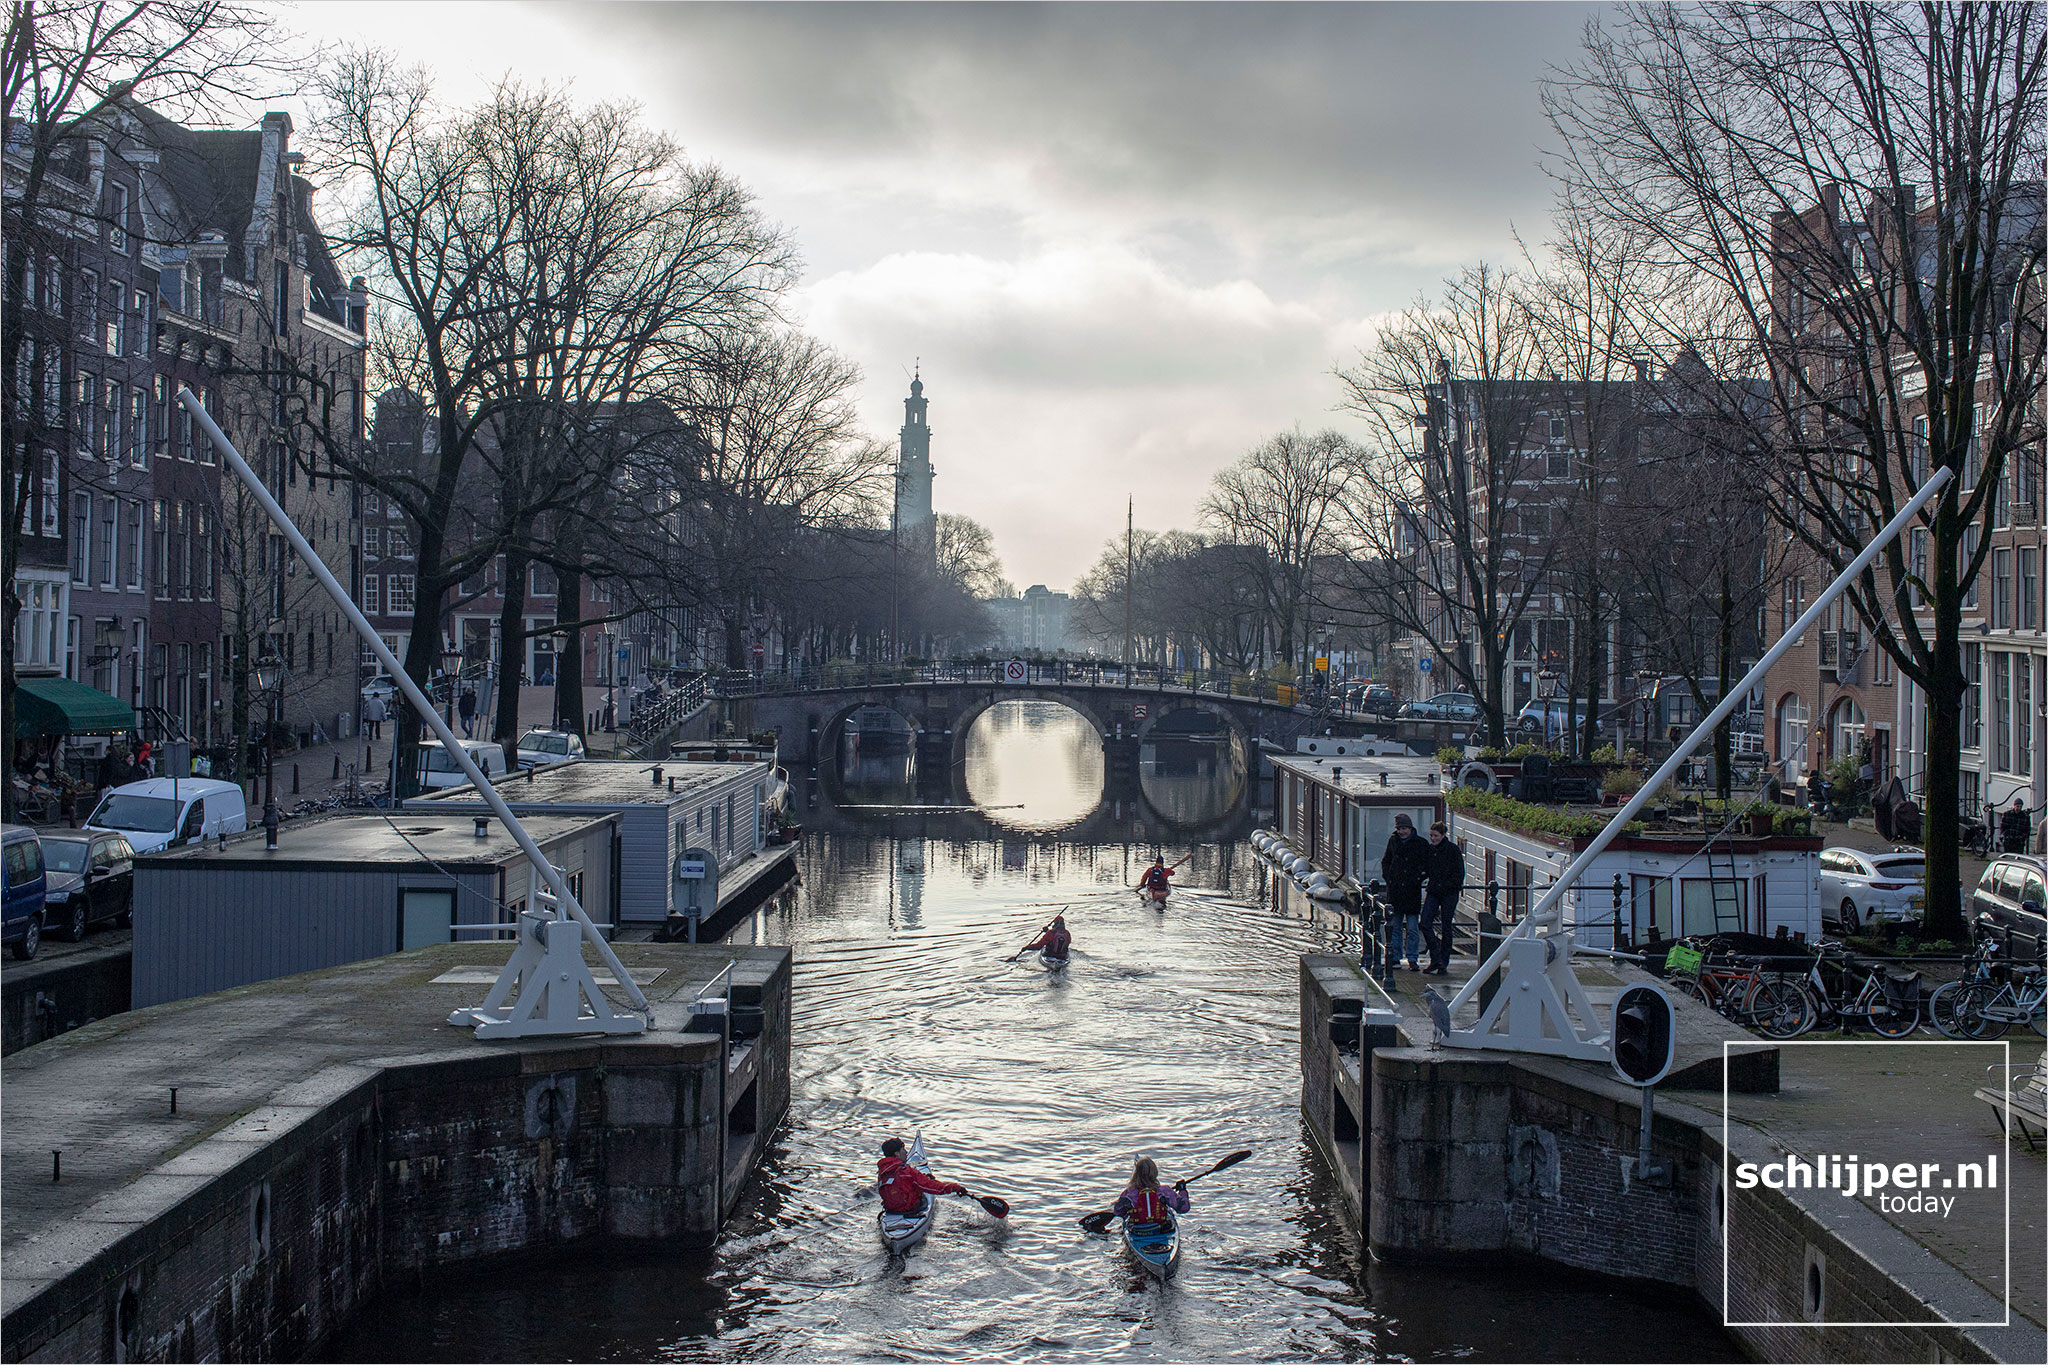 The Netherlands, Amsterdam, 31 december 2020